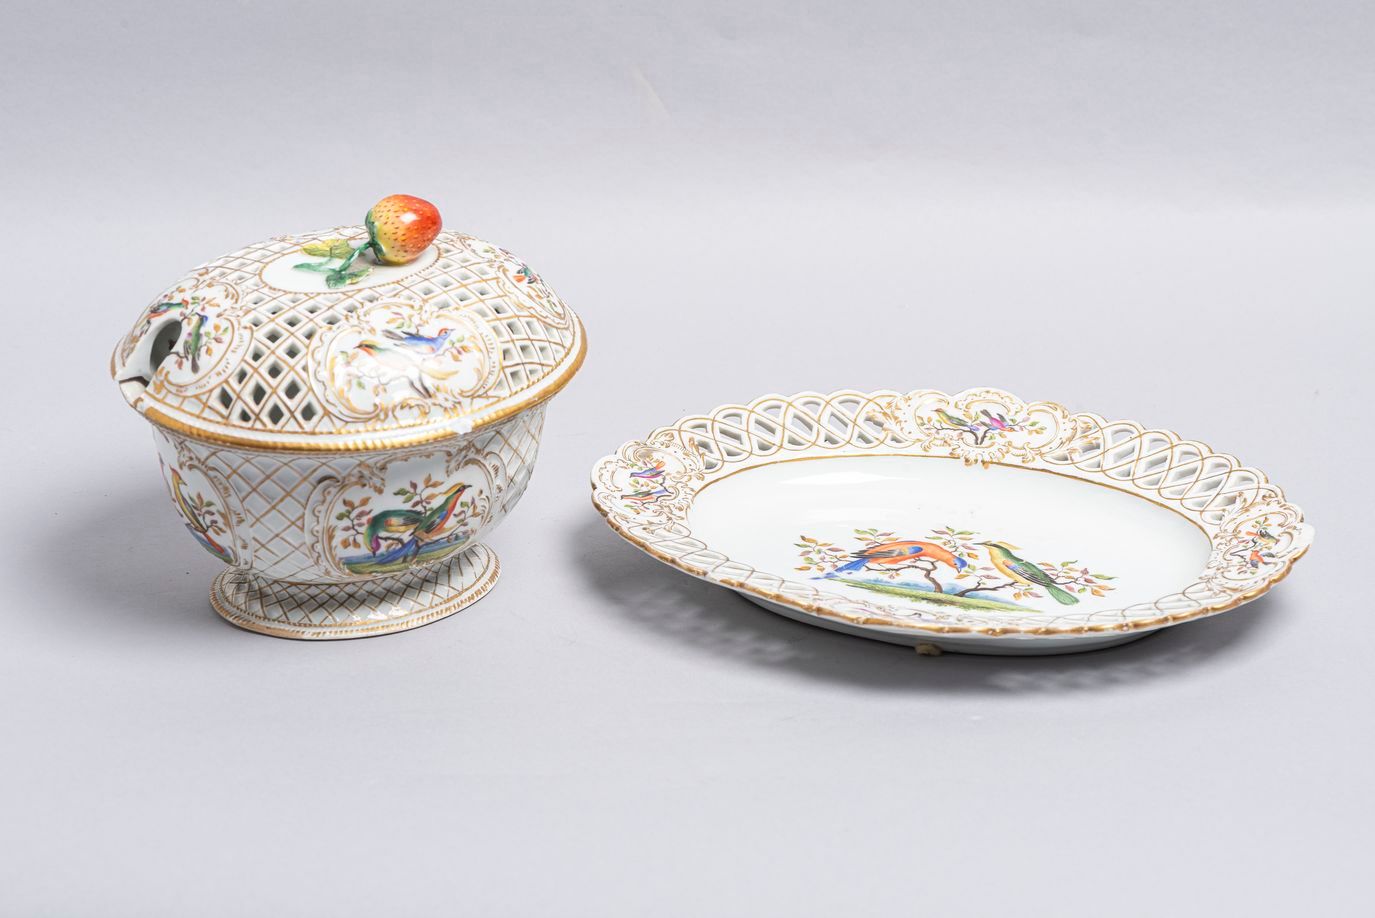 Null 36.迈森瓷器罐和展示架，19世纪，镂空瓷器，有鸟类装饰。(Chips)。高度：17厘米。杯子和碟子上装饰着蓝底金字的卷轴。